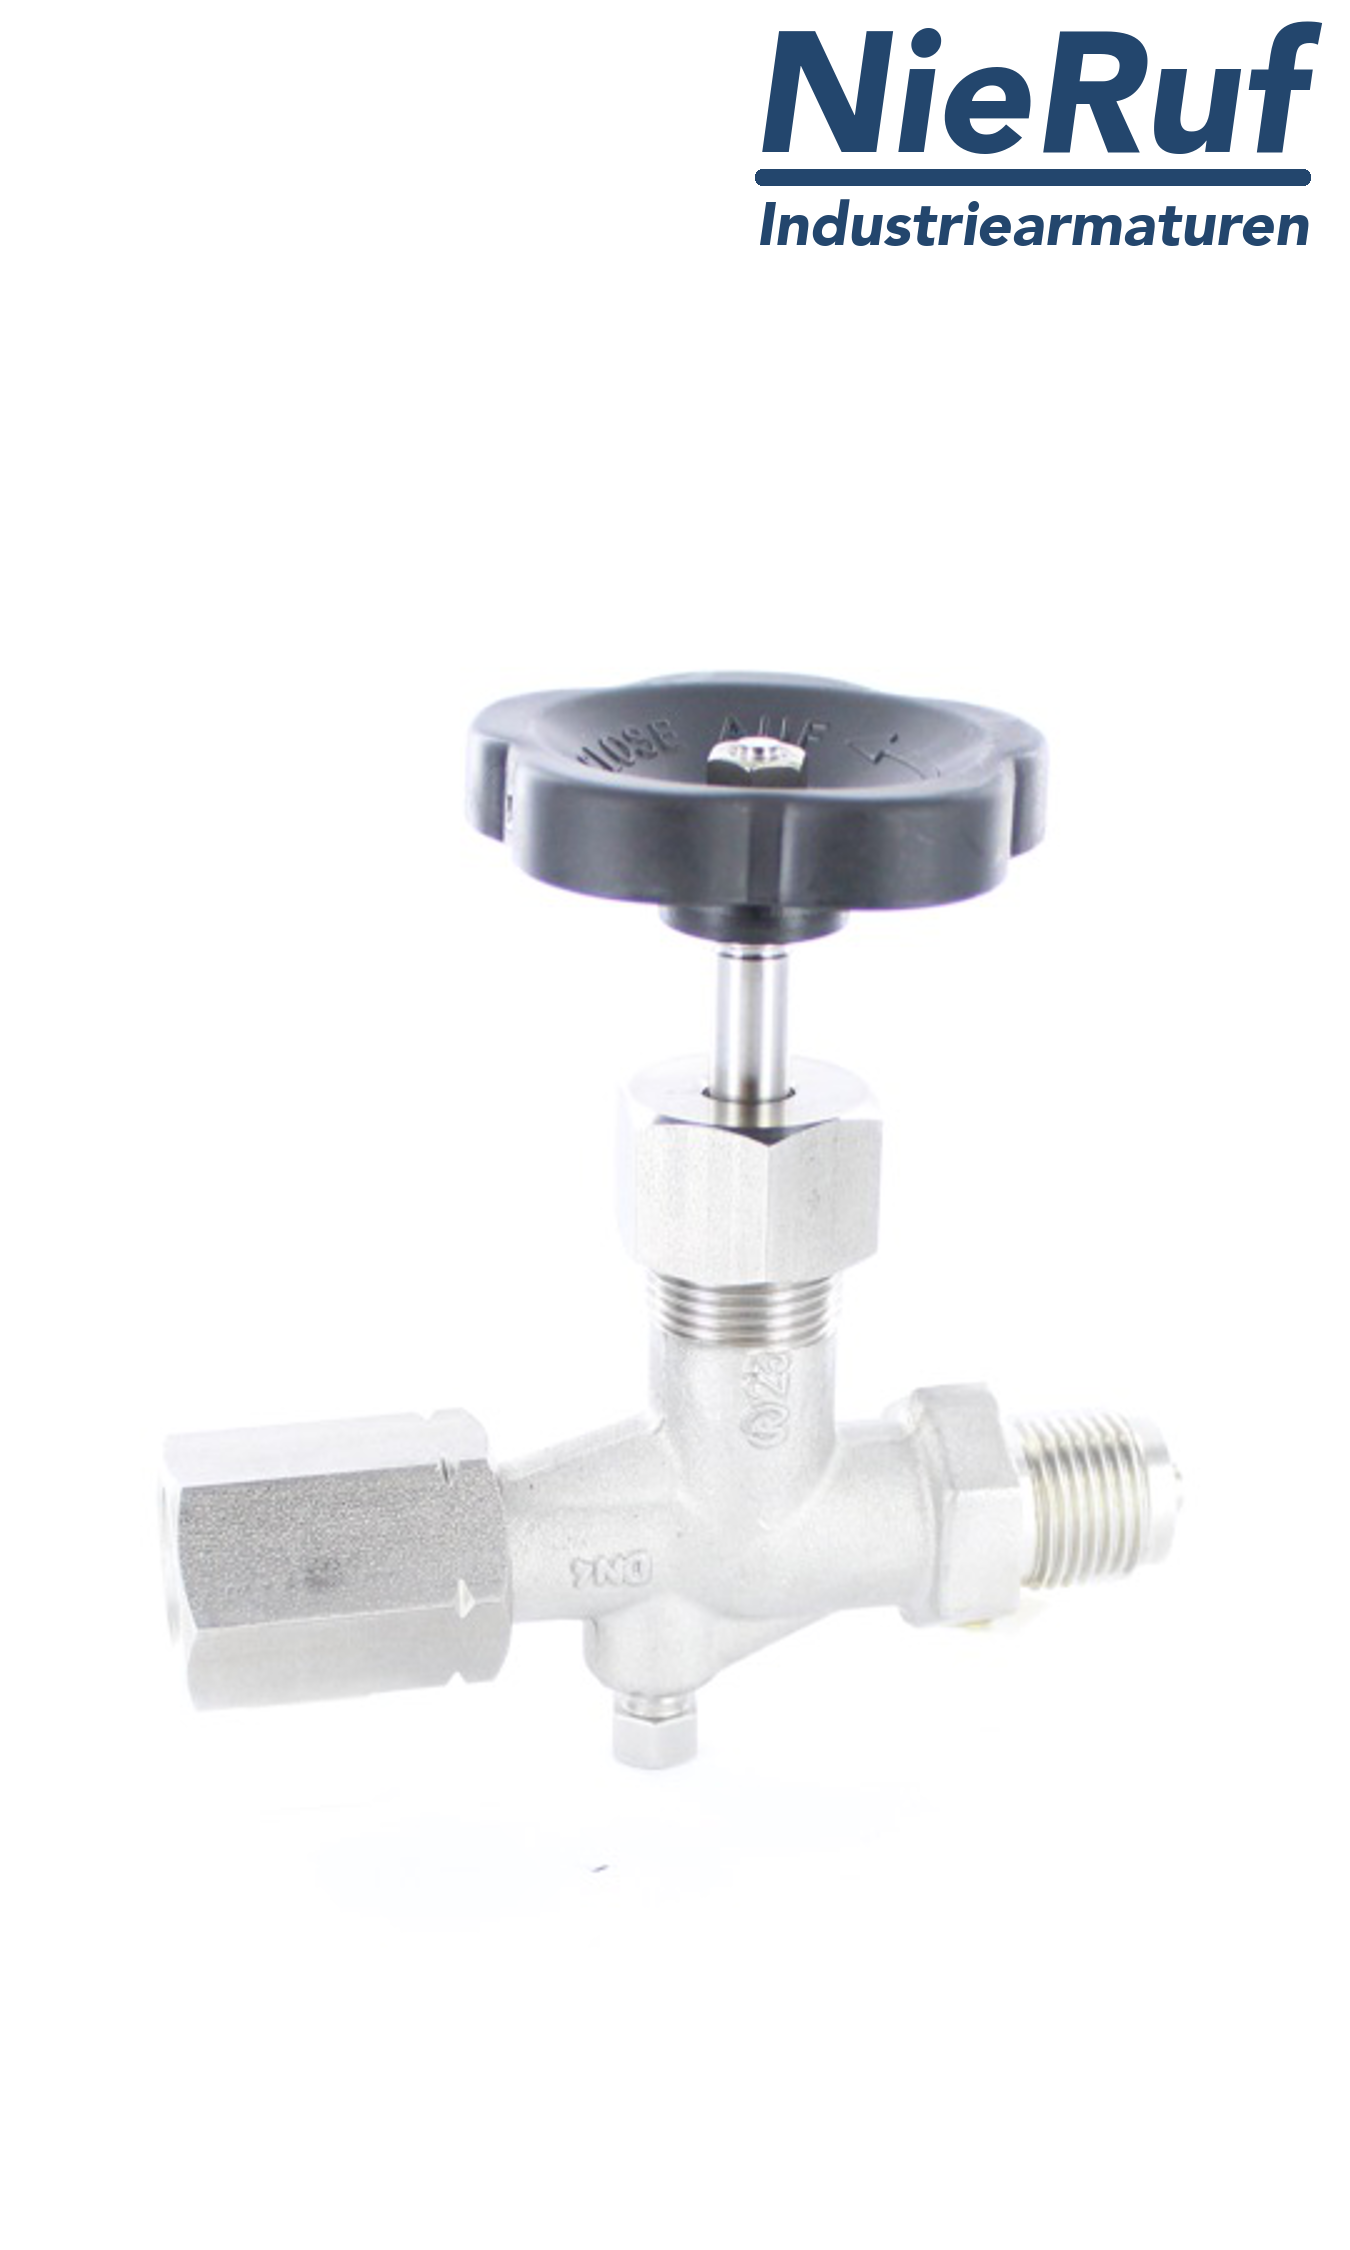 manometer gauge valves sleeve x sleeve DIN 16270 stainless steel 1.4571 400 bar